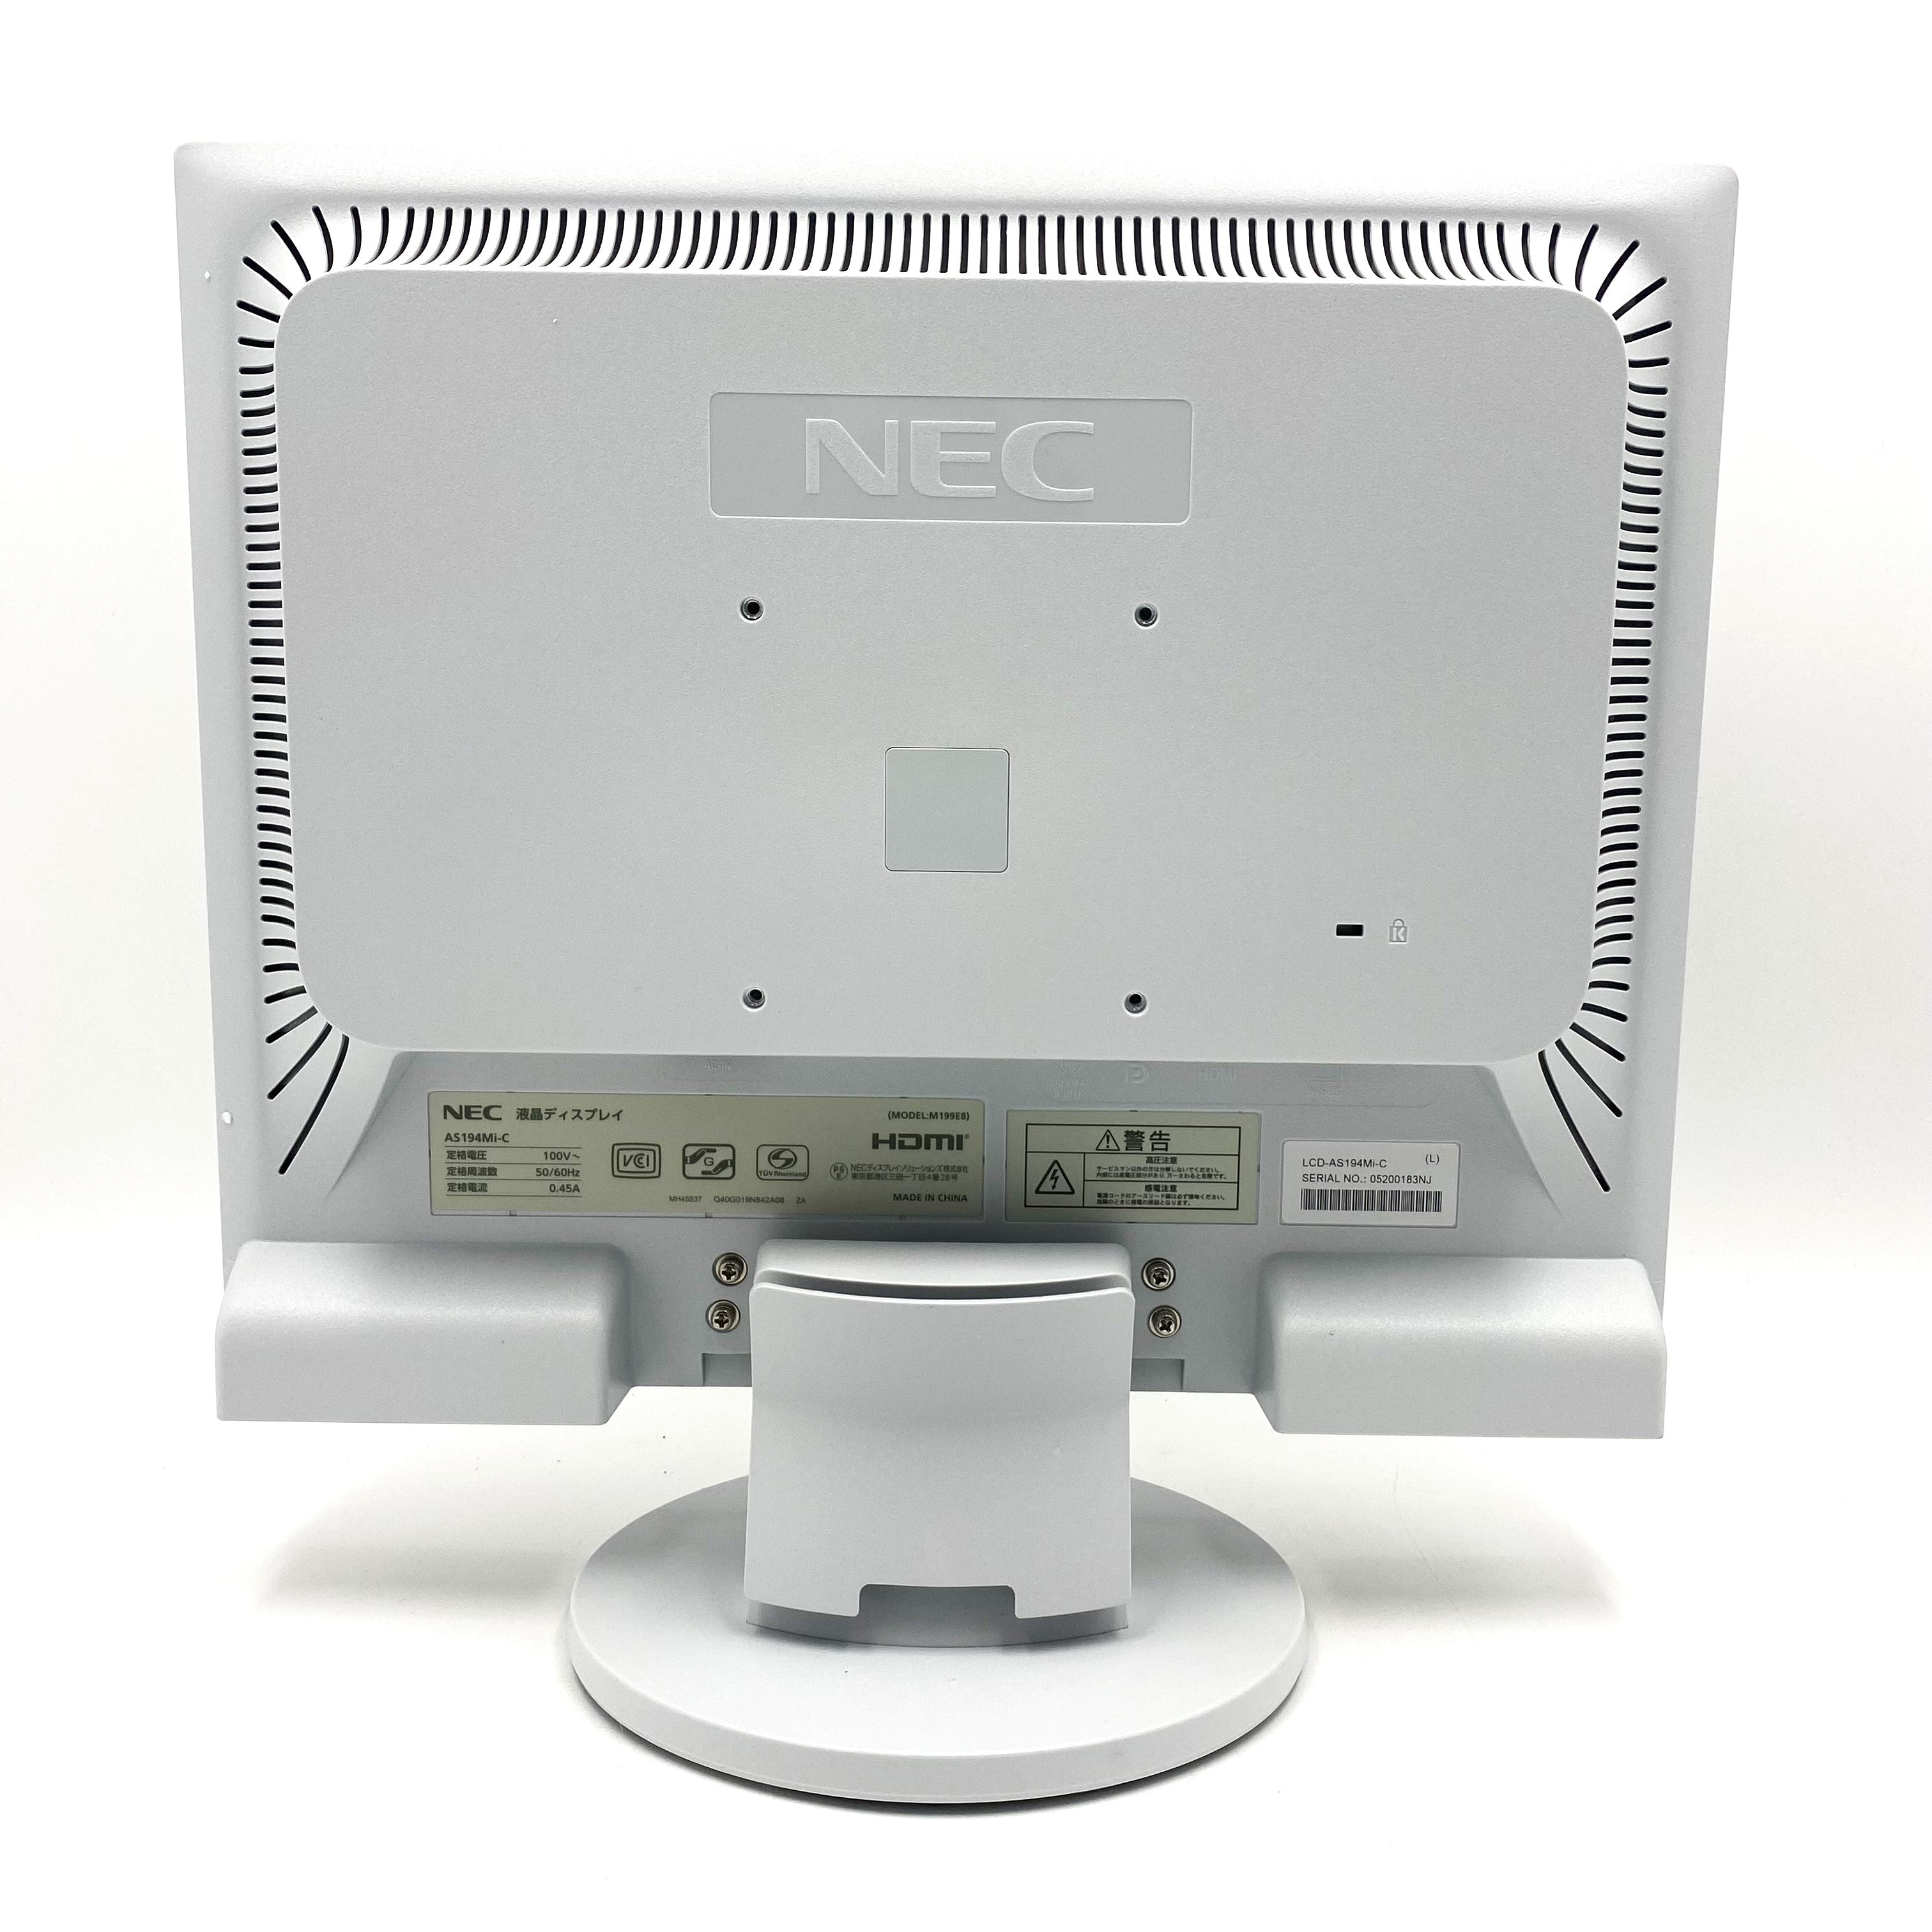 NEC製　19型 液晶ディスプレイ　LCD-AS194MI-C　未使用その他